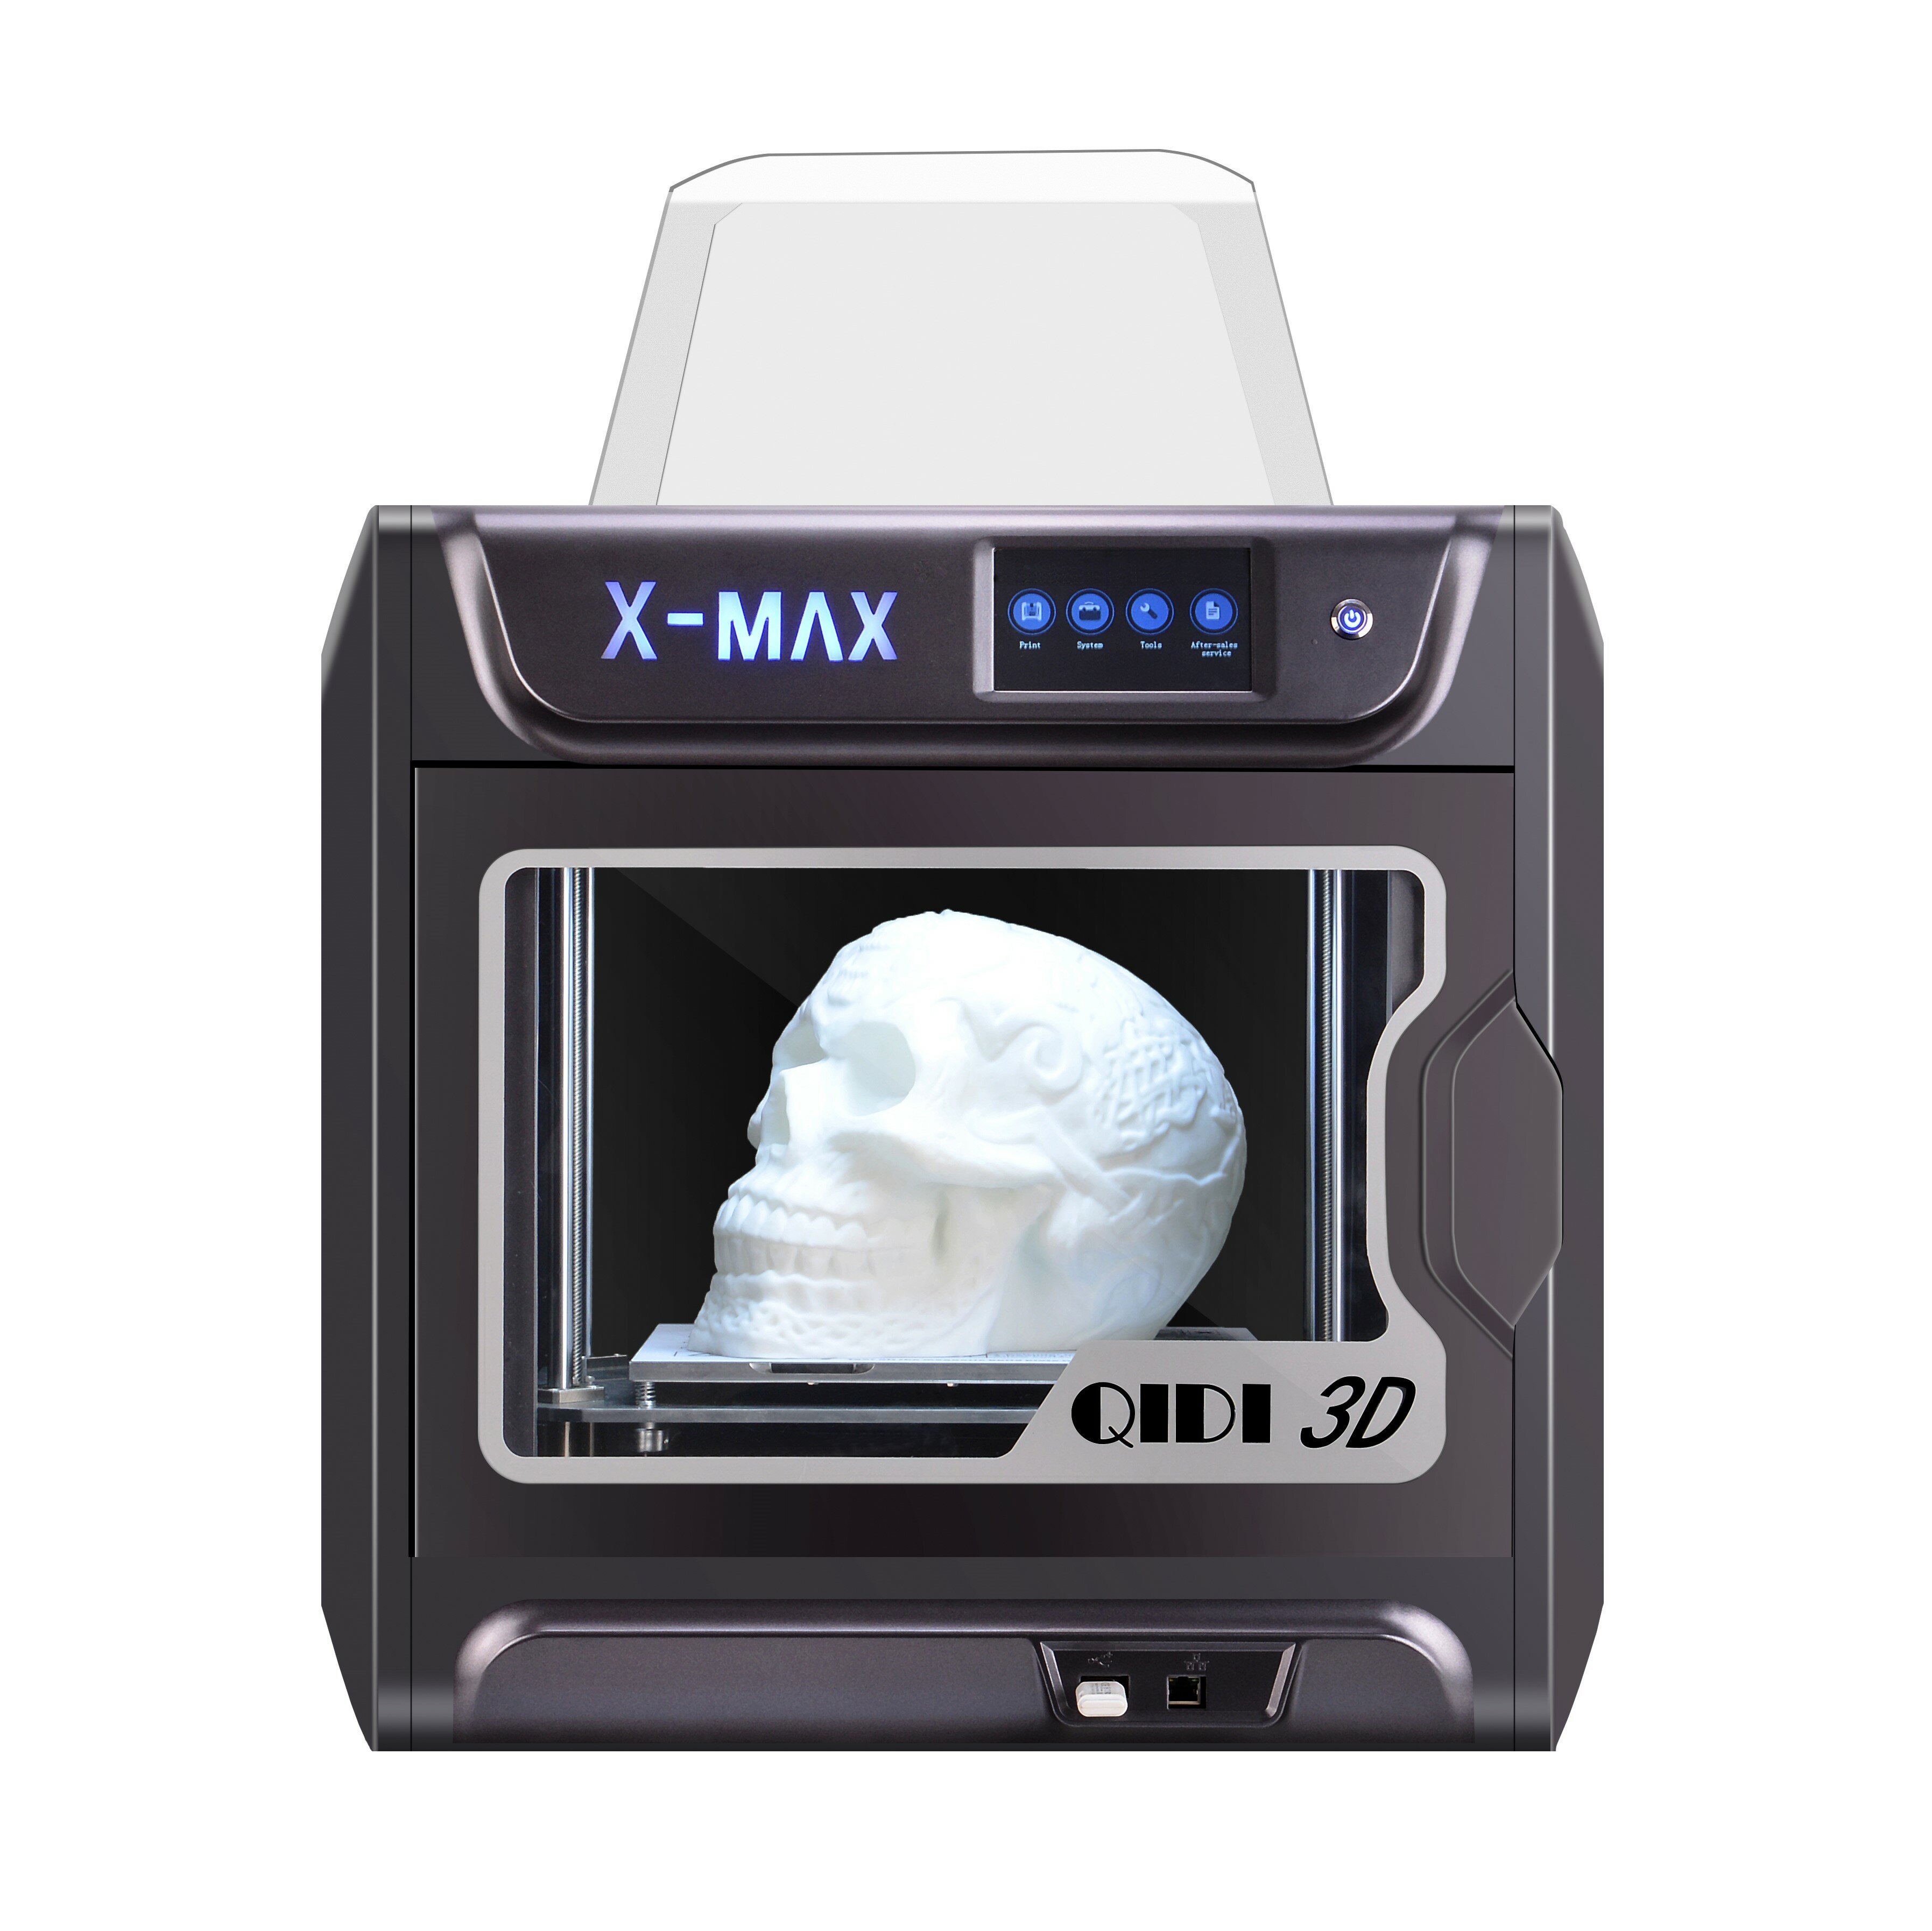 QIDI? X-MAX industri?le kwaliteit voorgemonteerde 3D-printerkit 300x250x300mm Groot afdrukgebied met